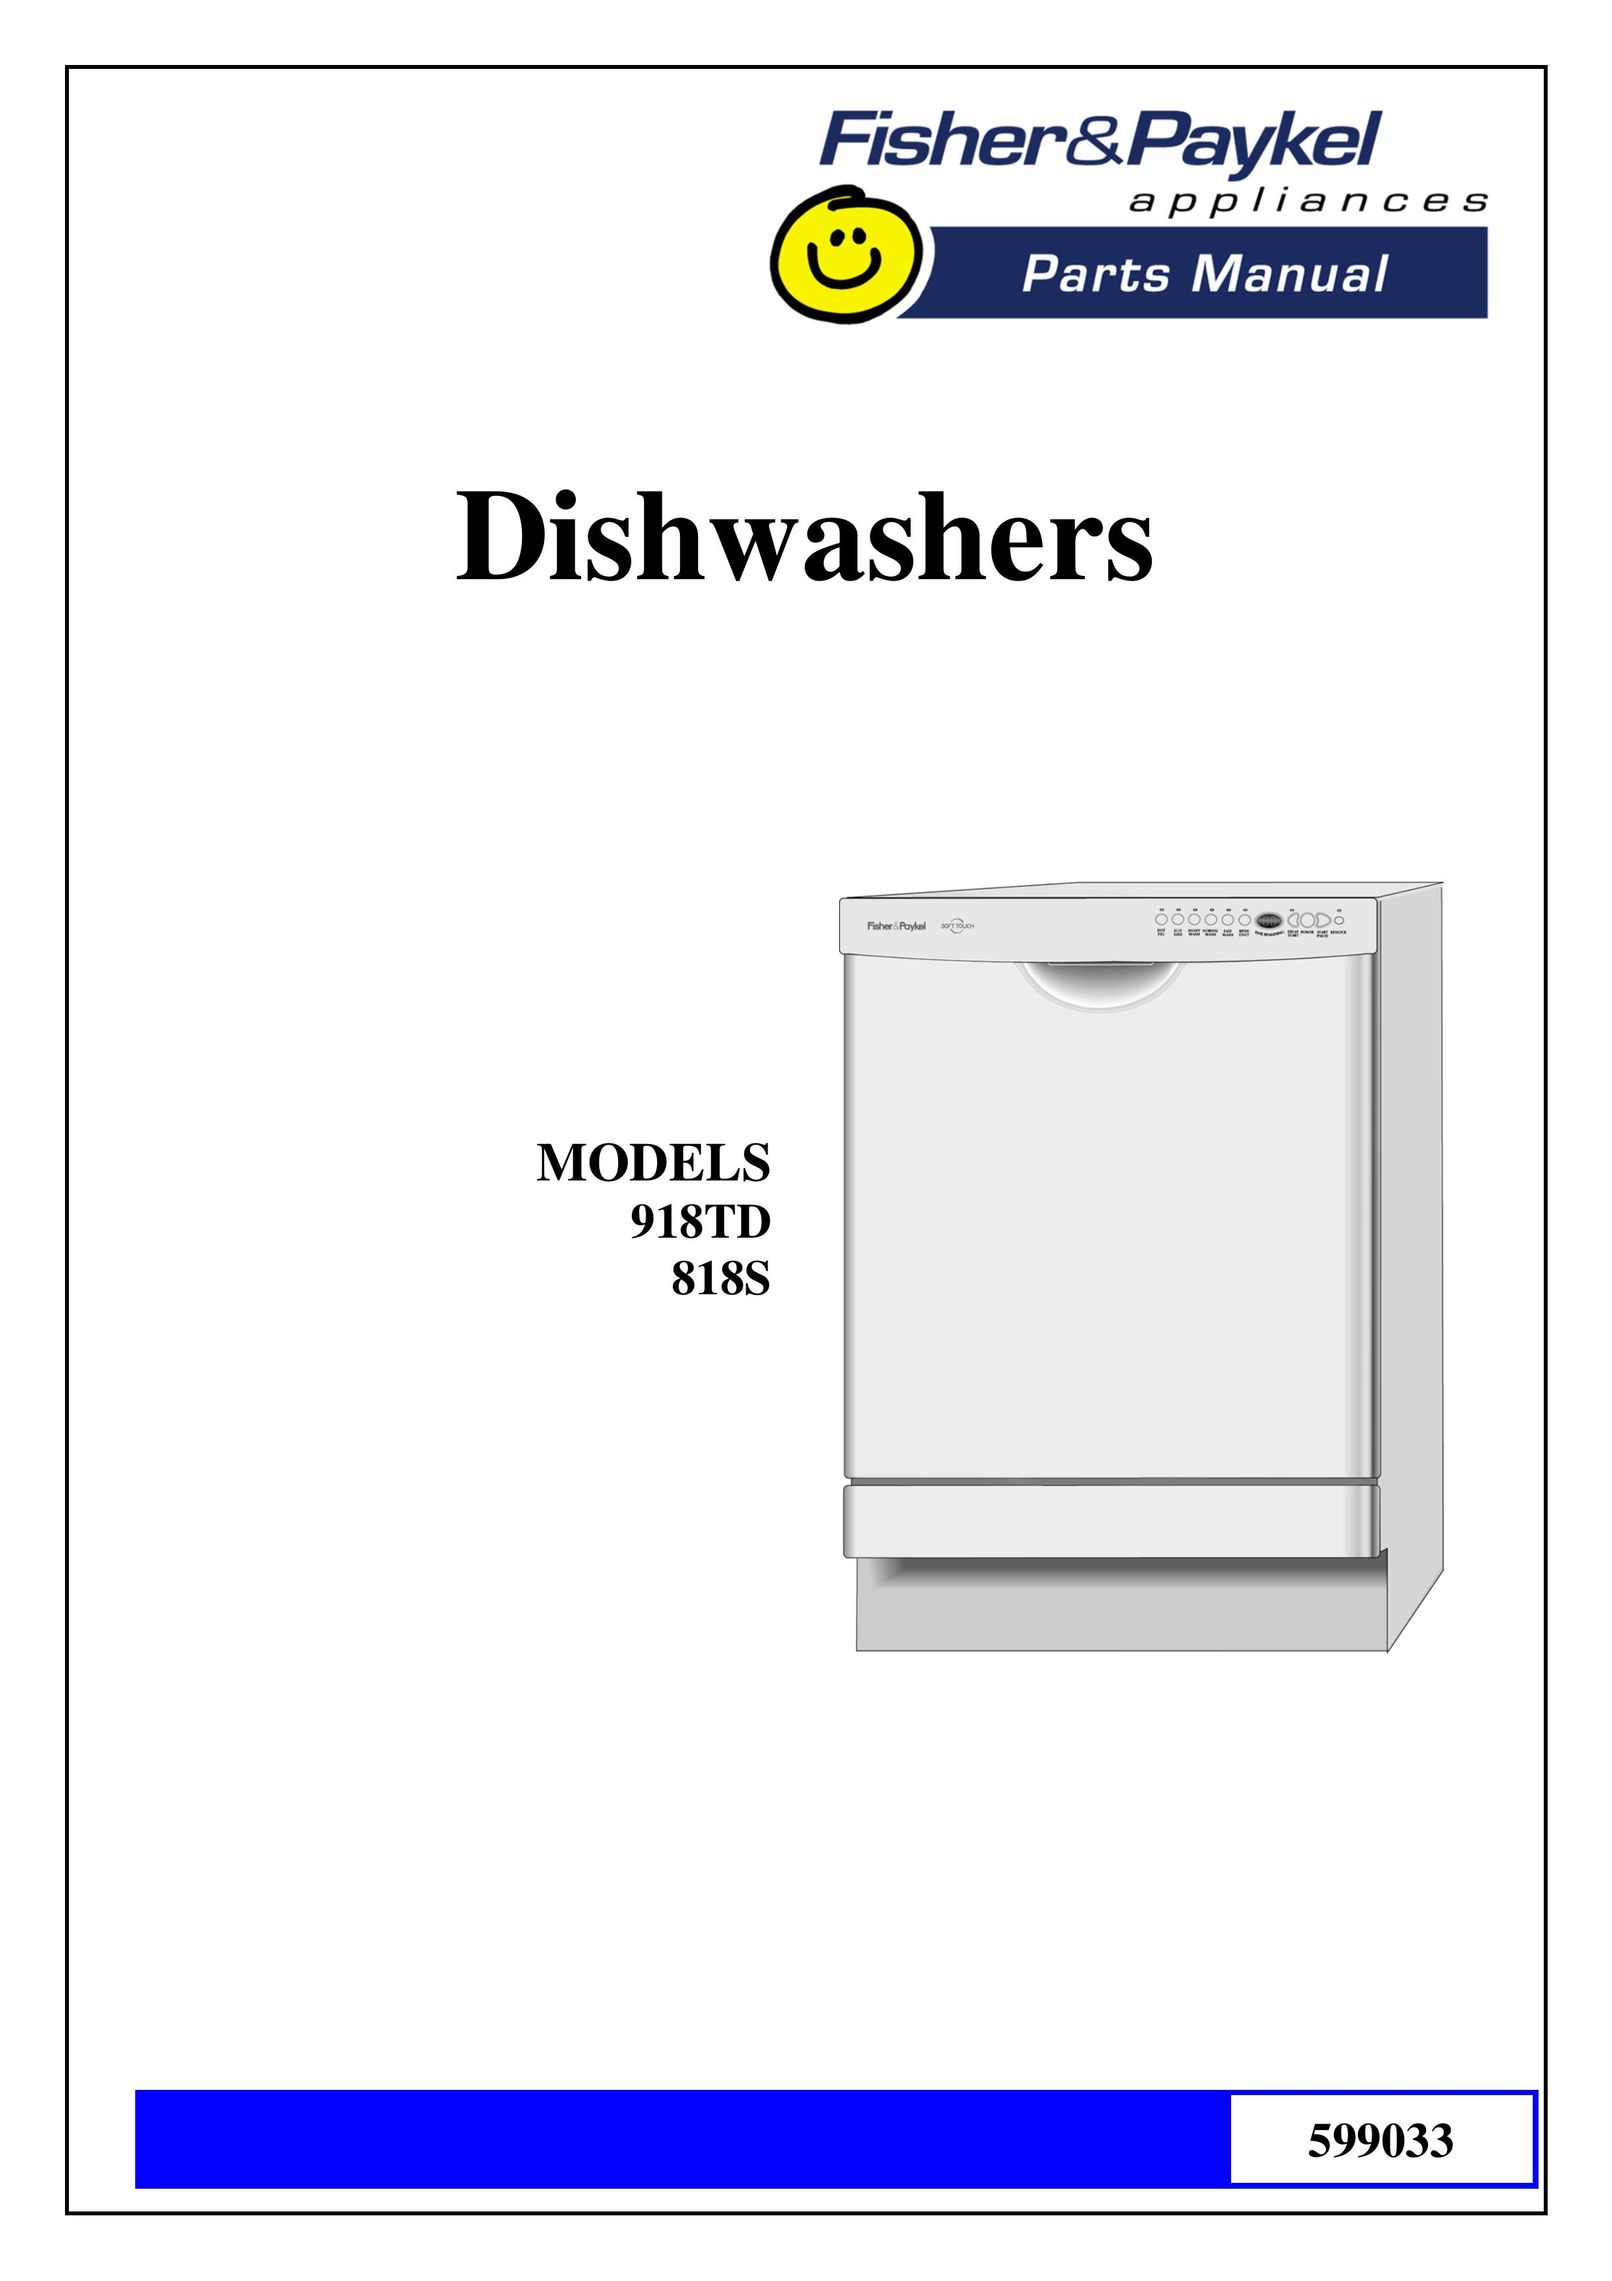 Fisher & Paykel 818S Dishwasher User Manual